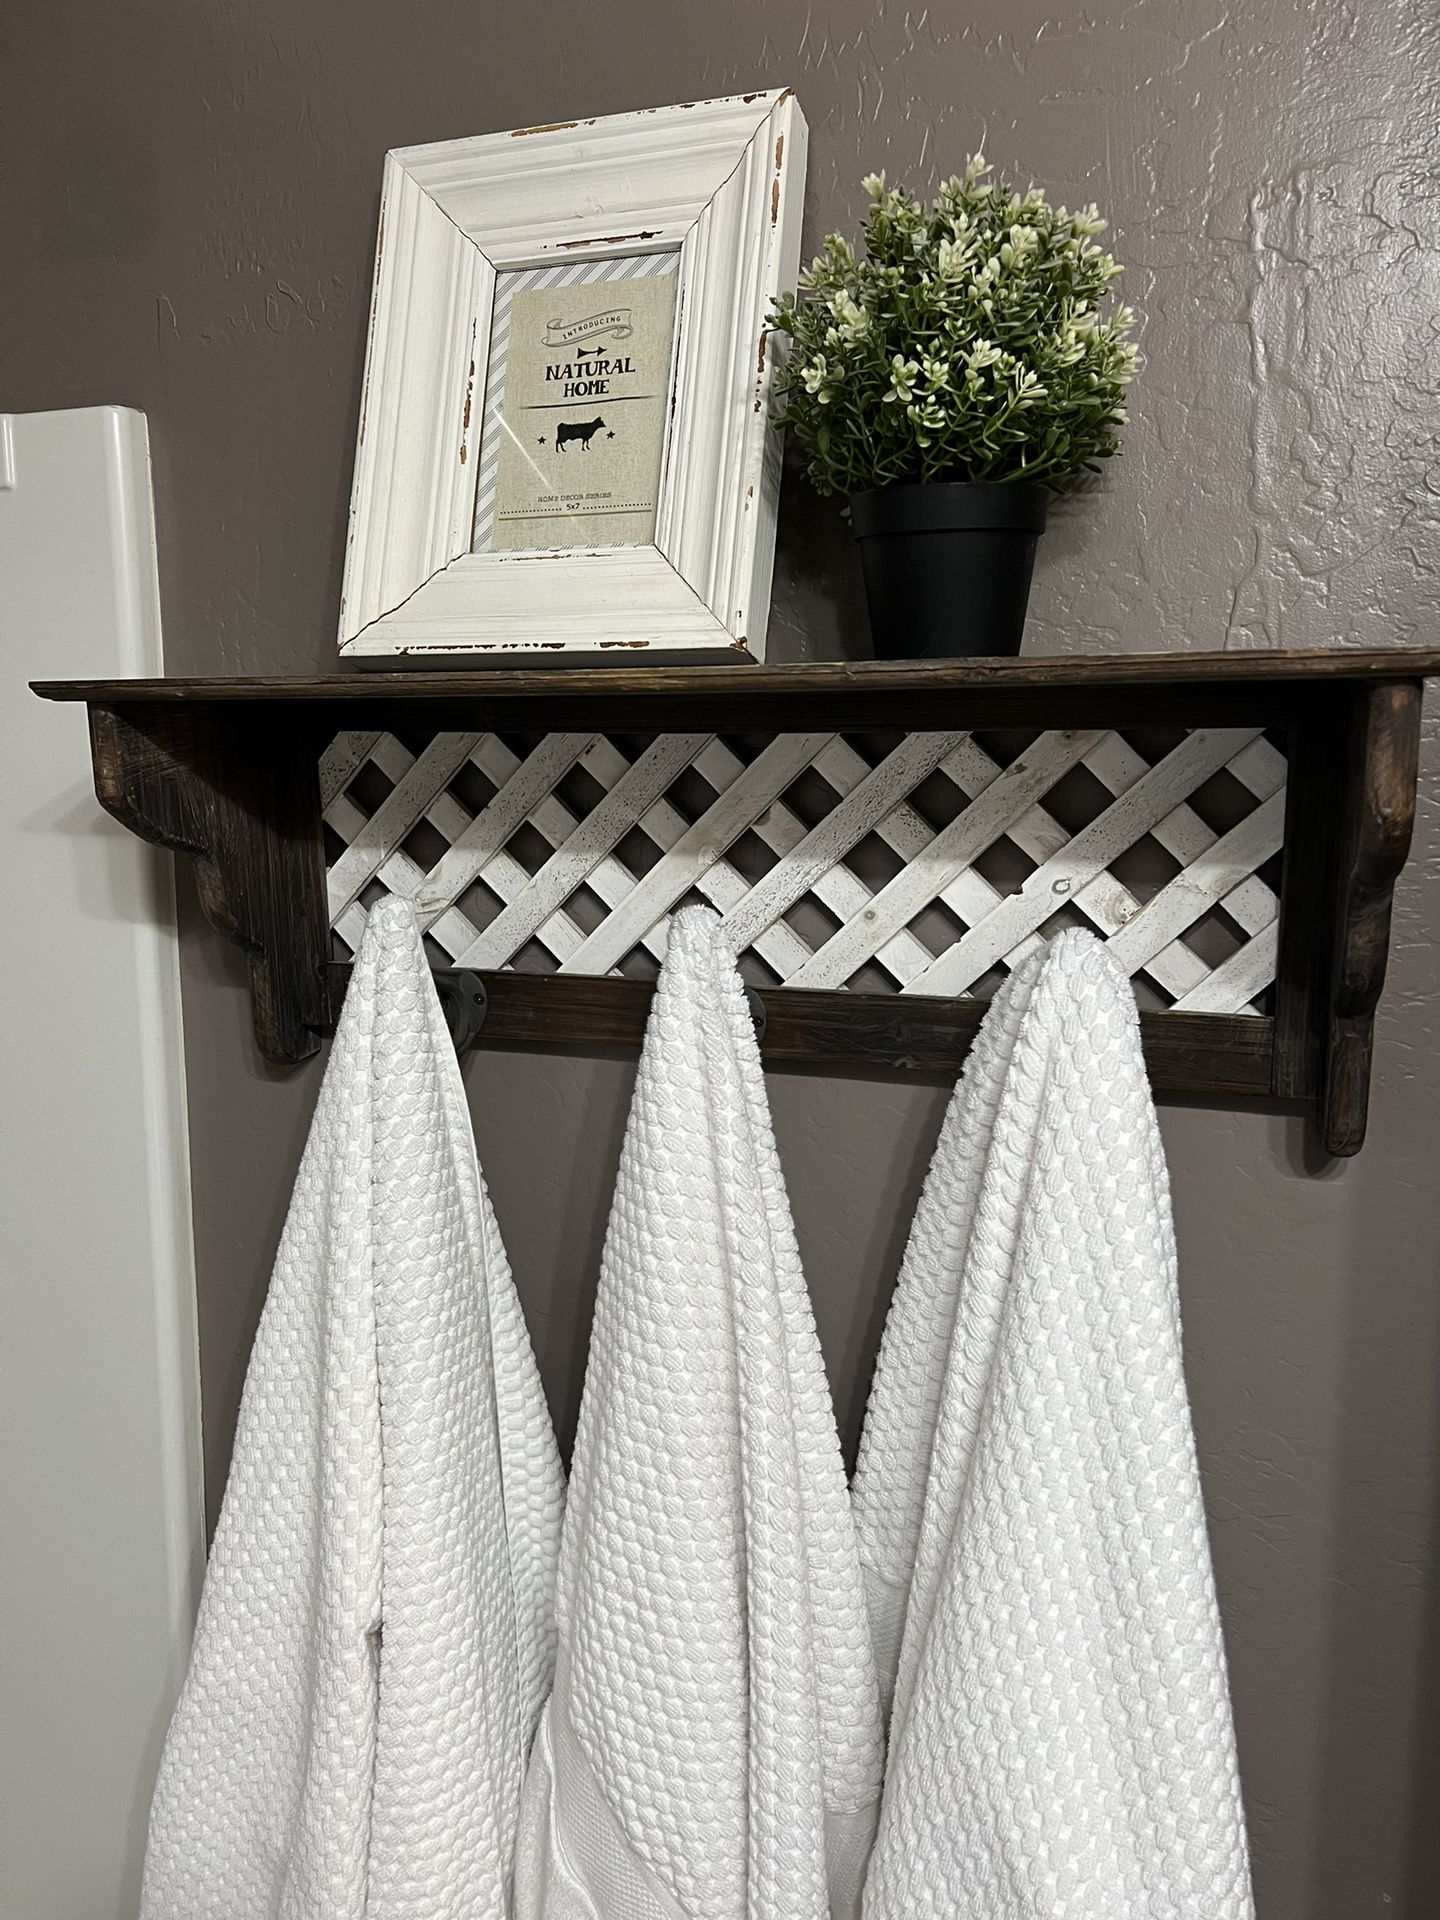 Decorative Towel Rack